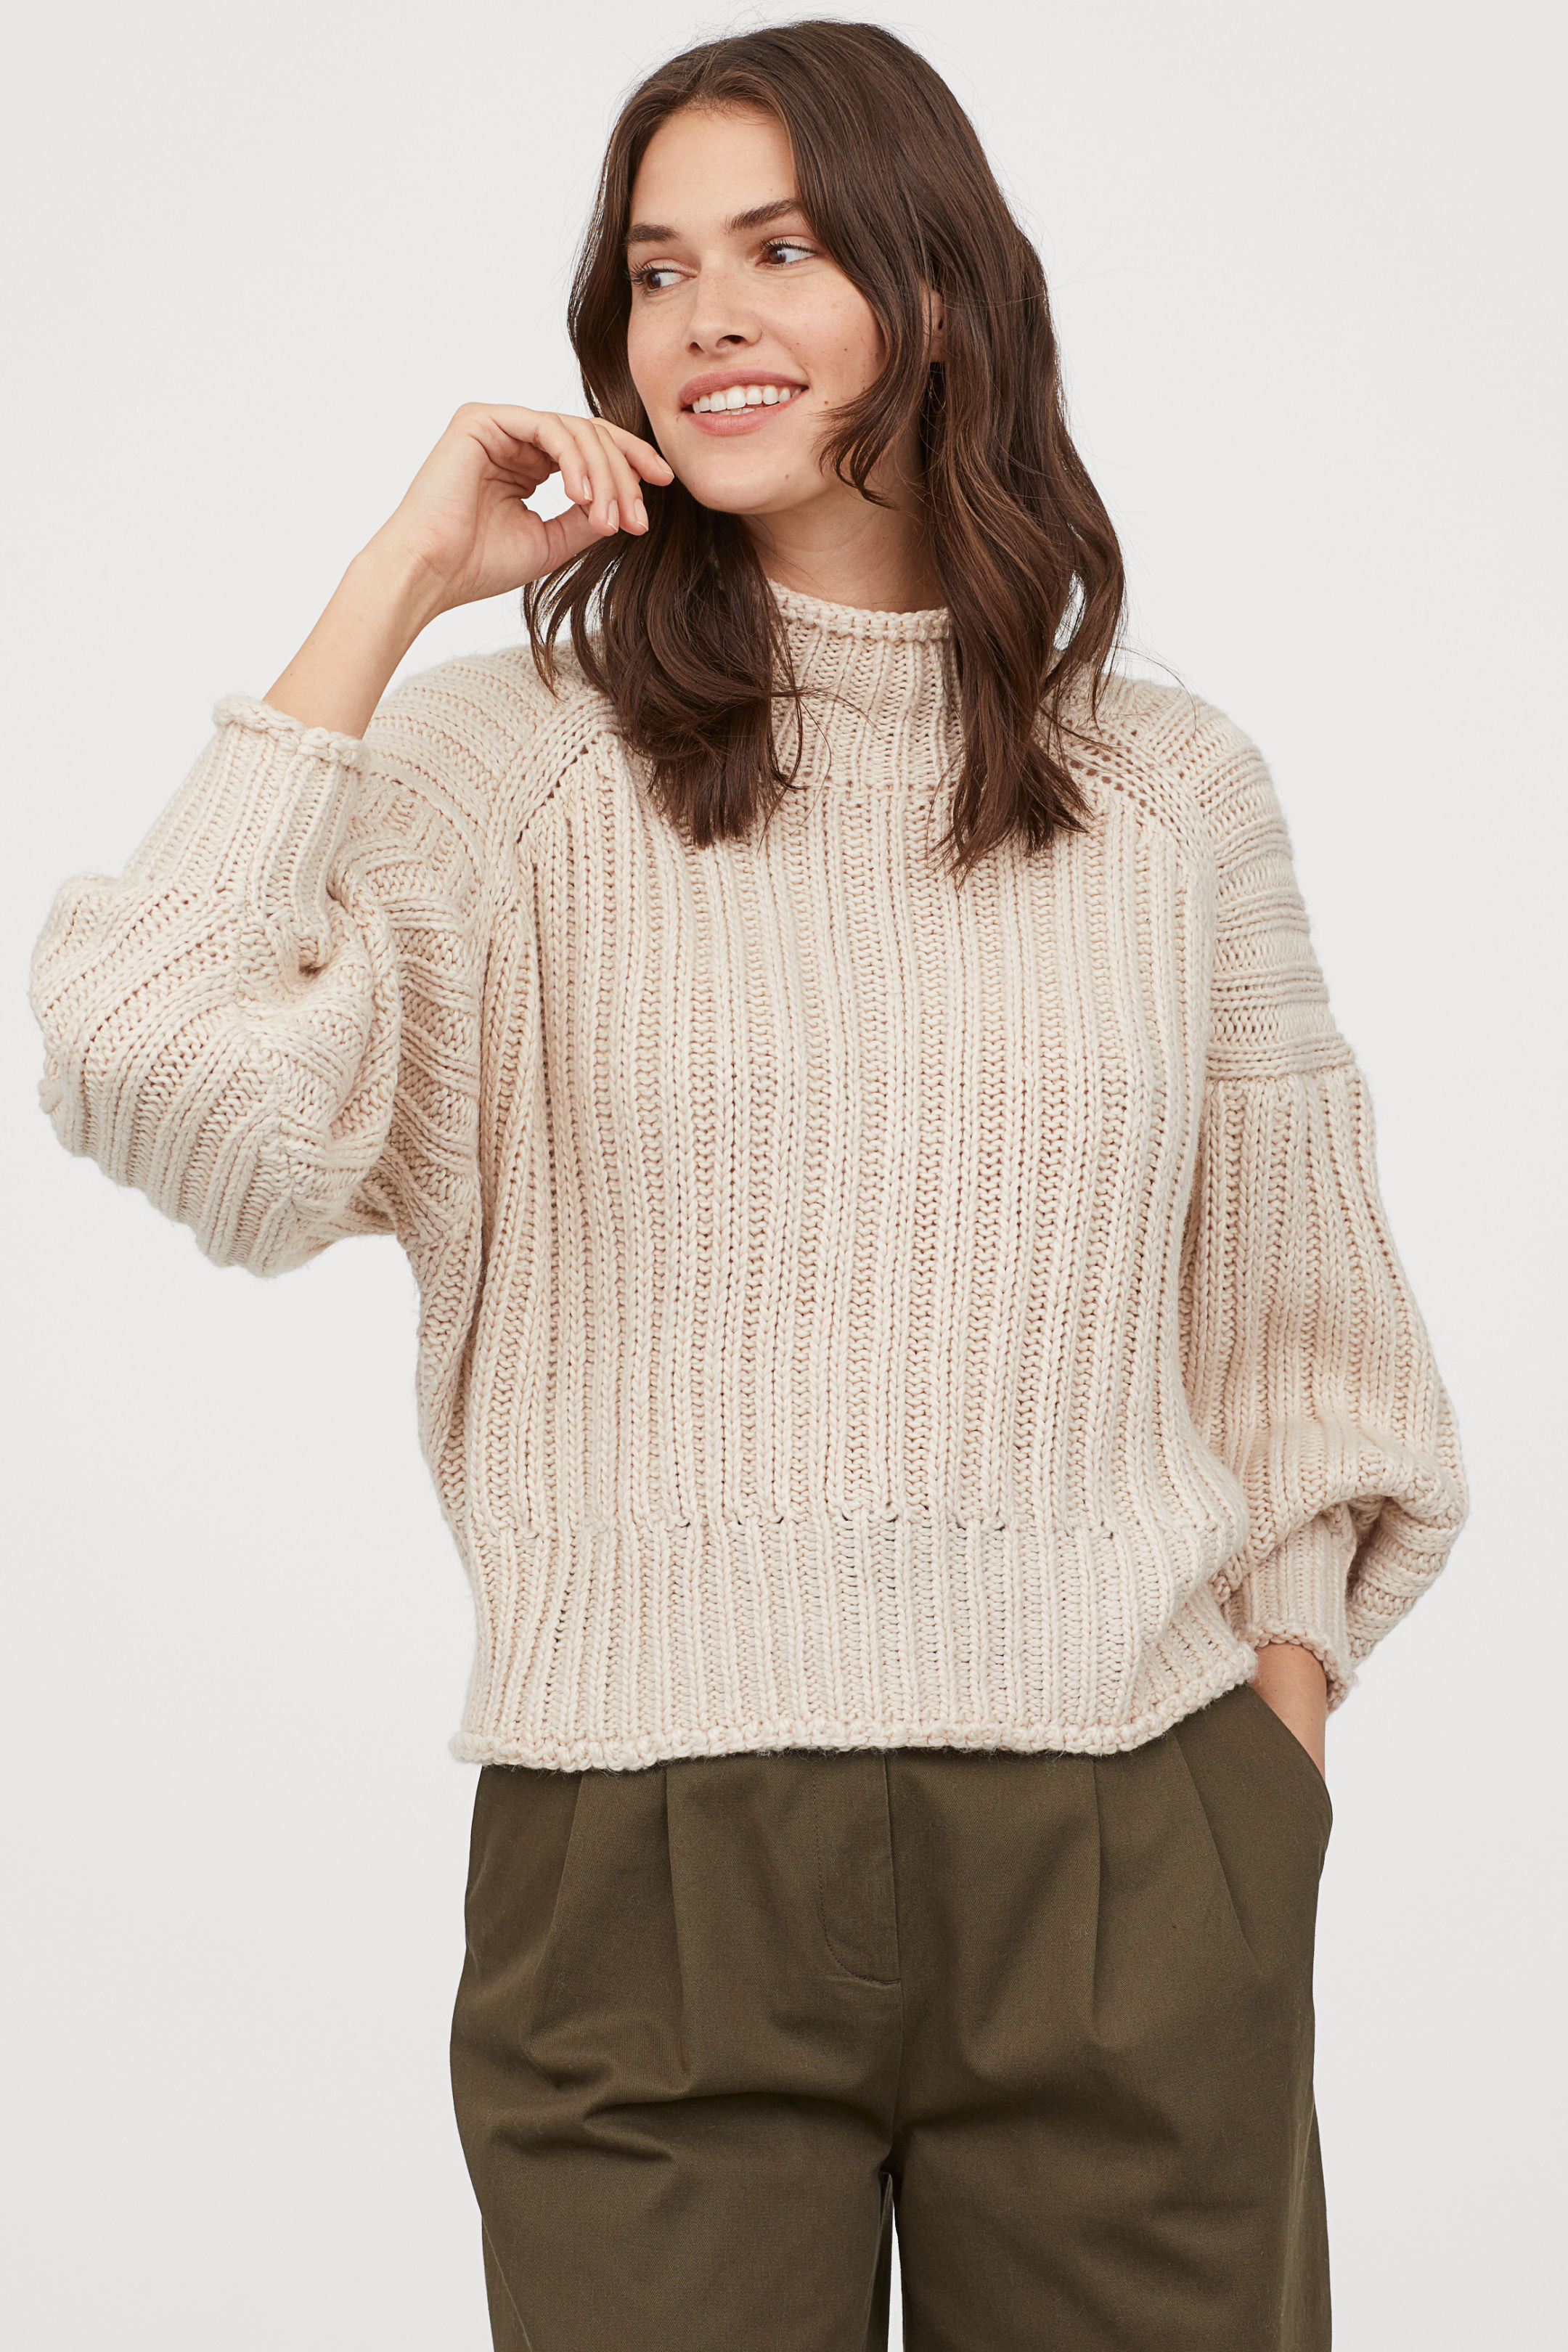 h&m chunky knit sweater